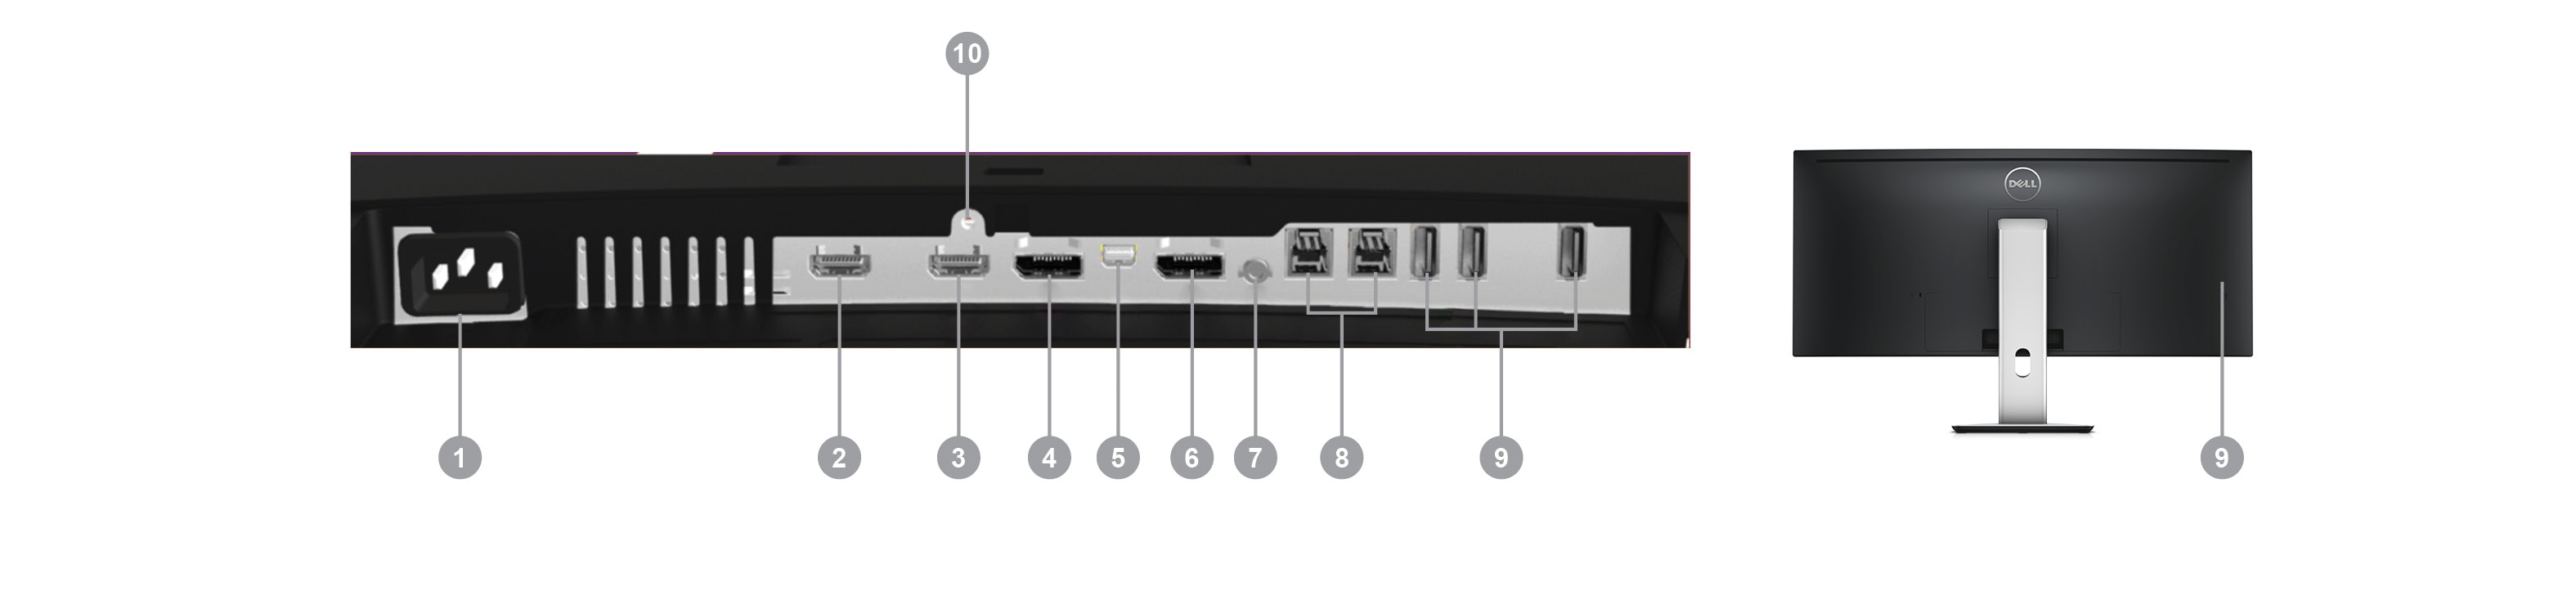 ultrasharp 34 (u3415w) monitor - Connectivity Options